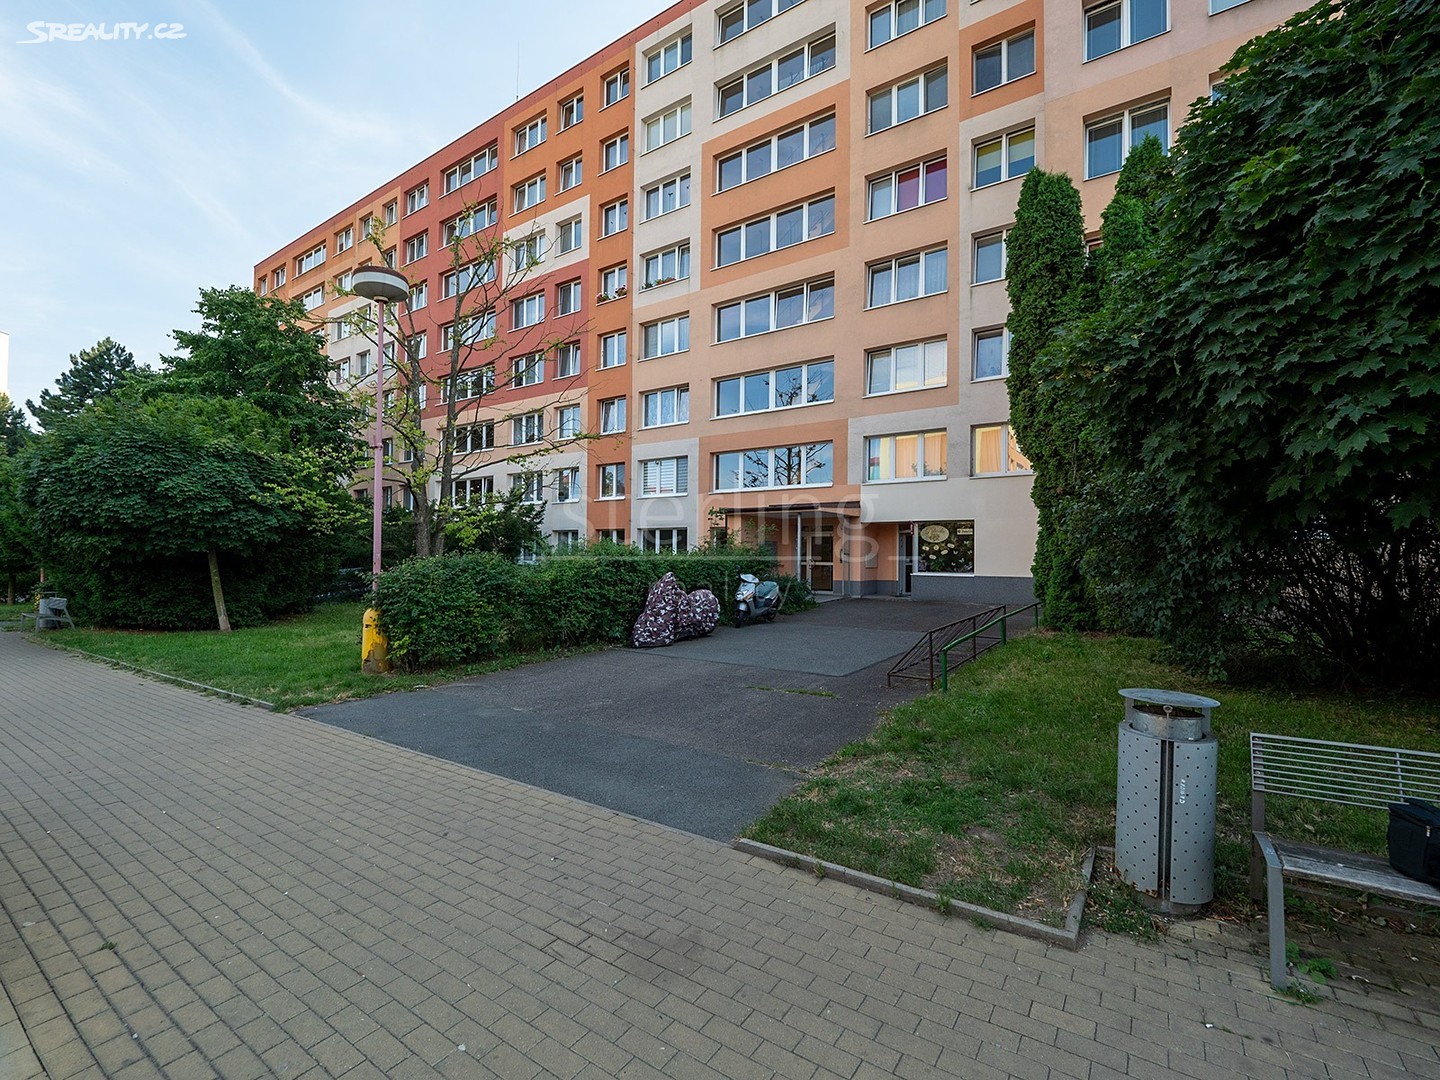 Pronájem bytu 2+kk 40 m², Dr. E. Beneše, Neratovice